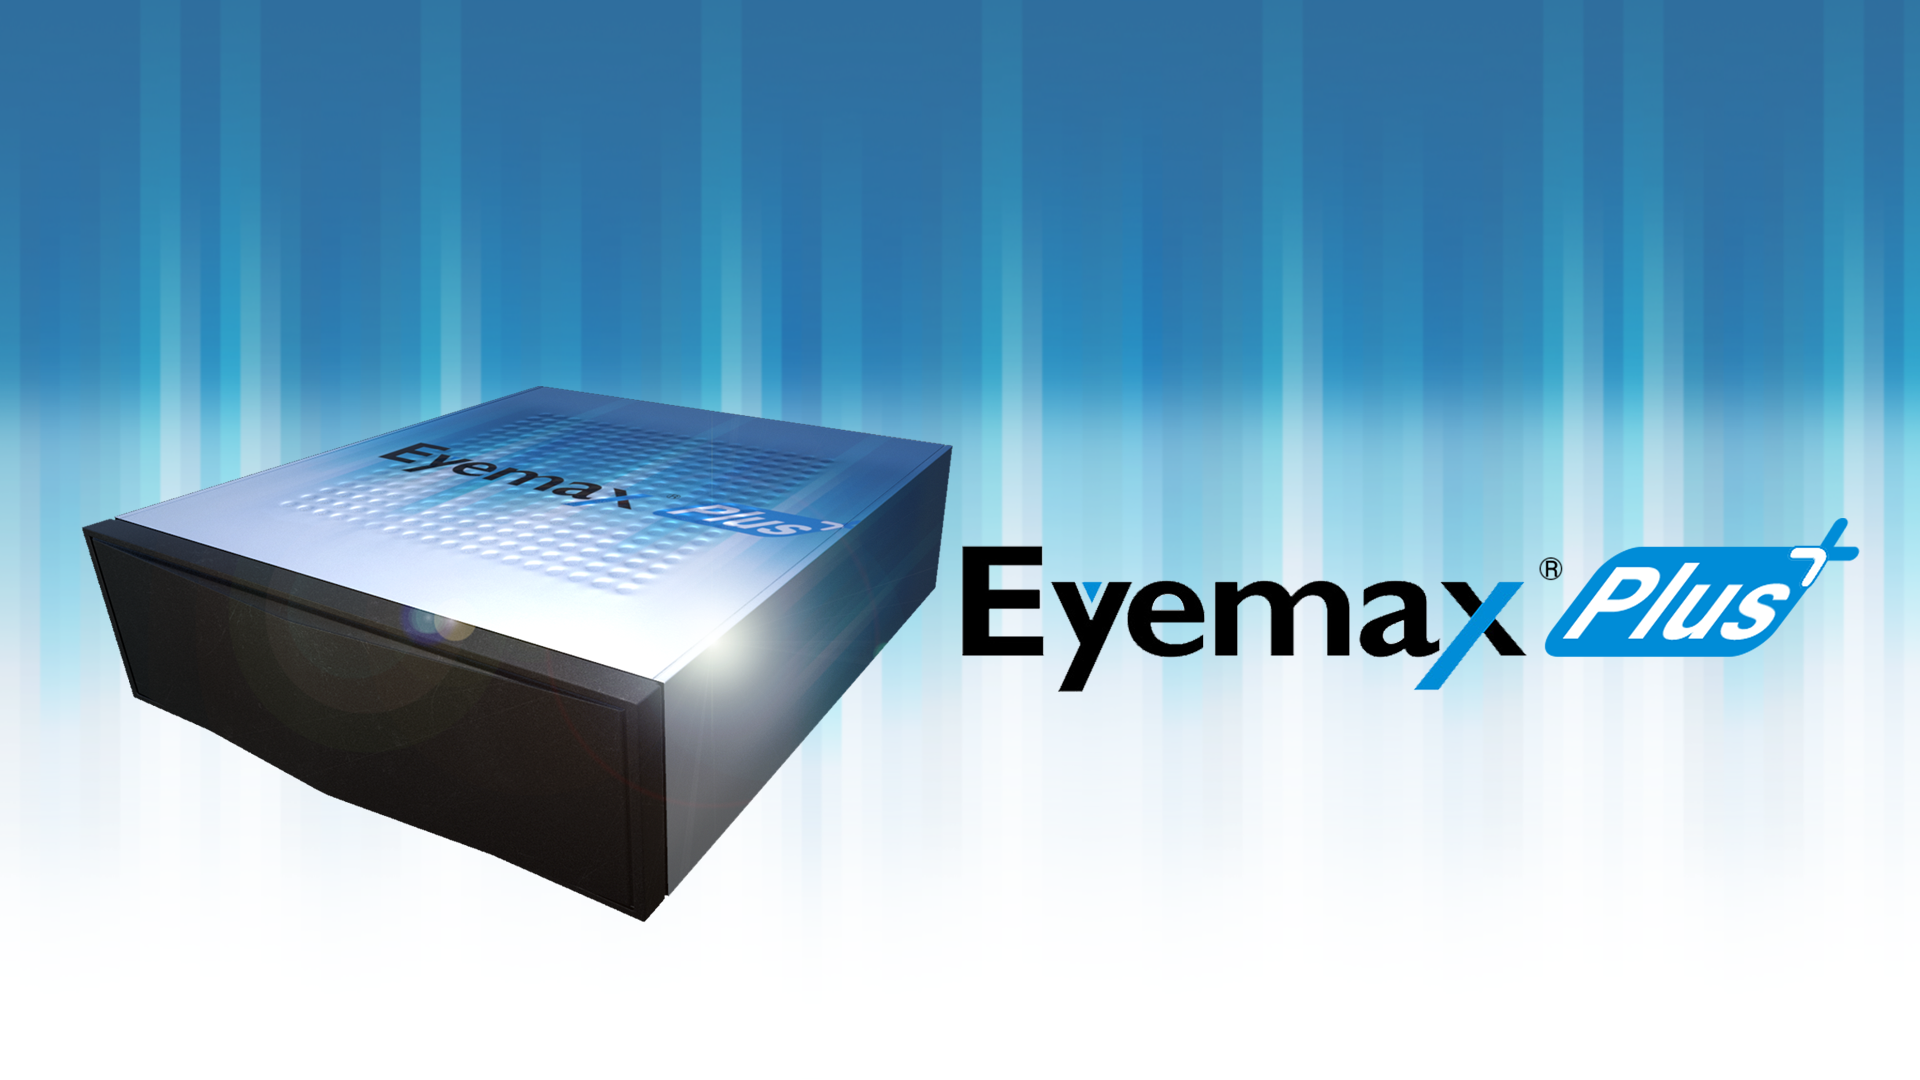 Eyemax Plus Somatosensory Play System